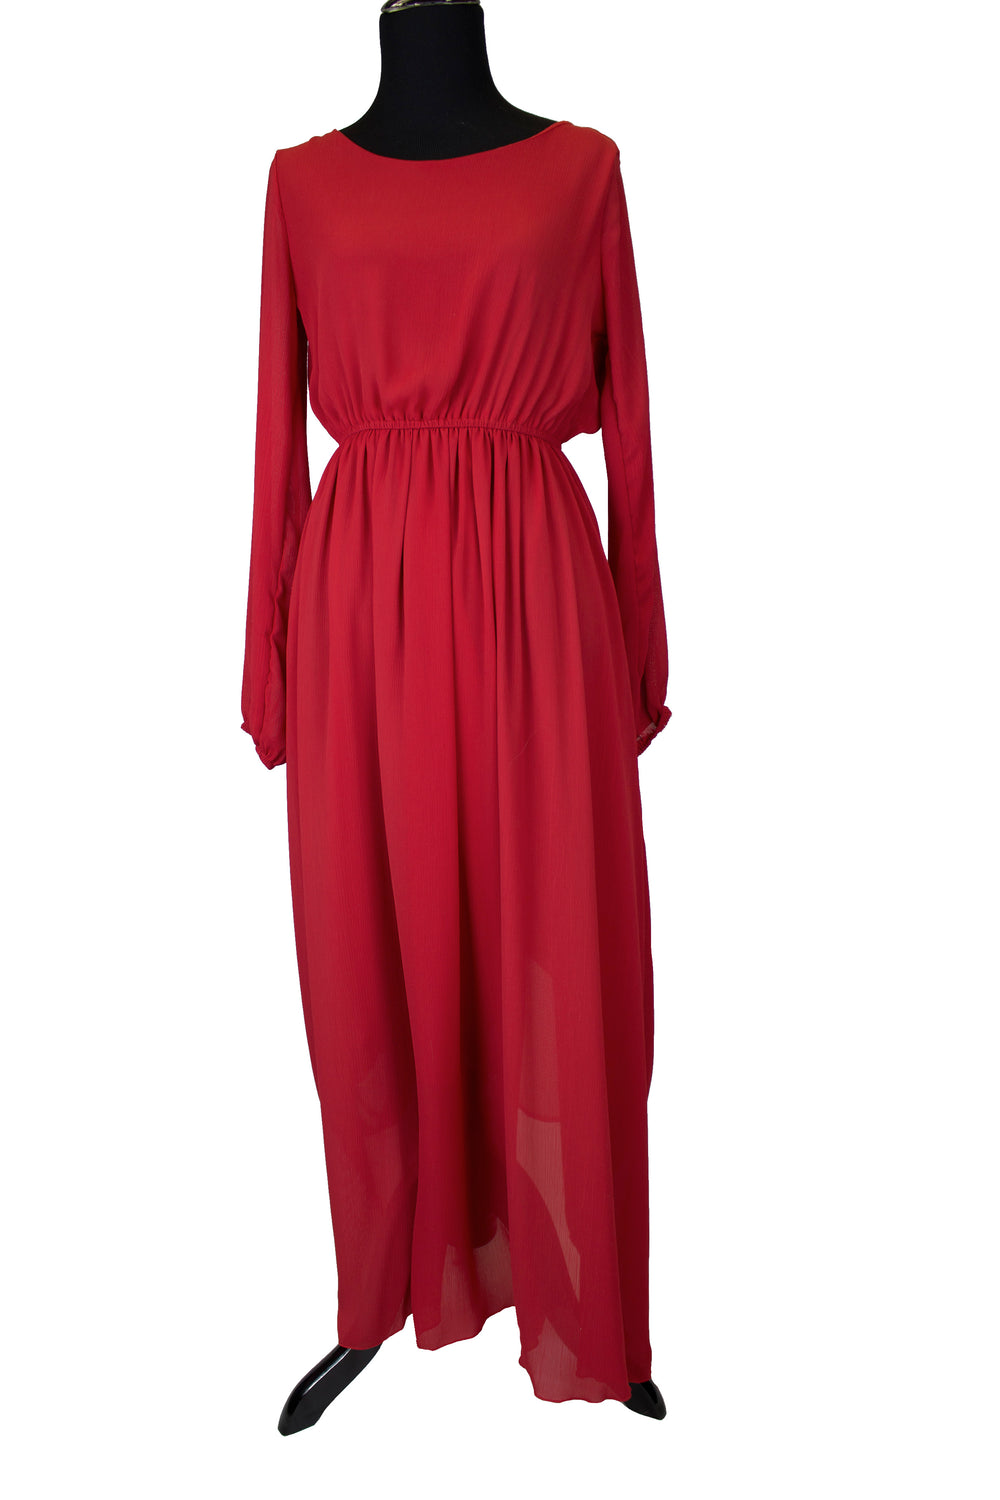 basic red long sleeve maxi dress